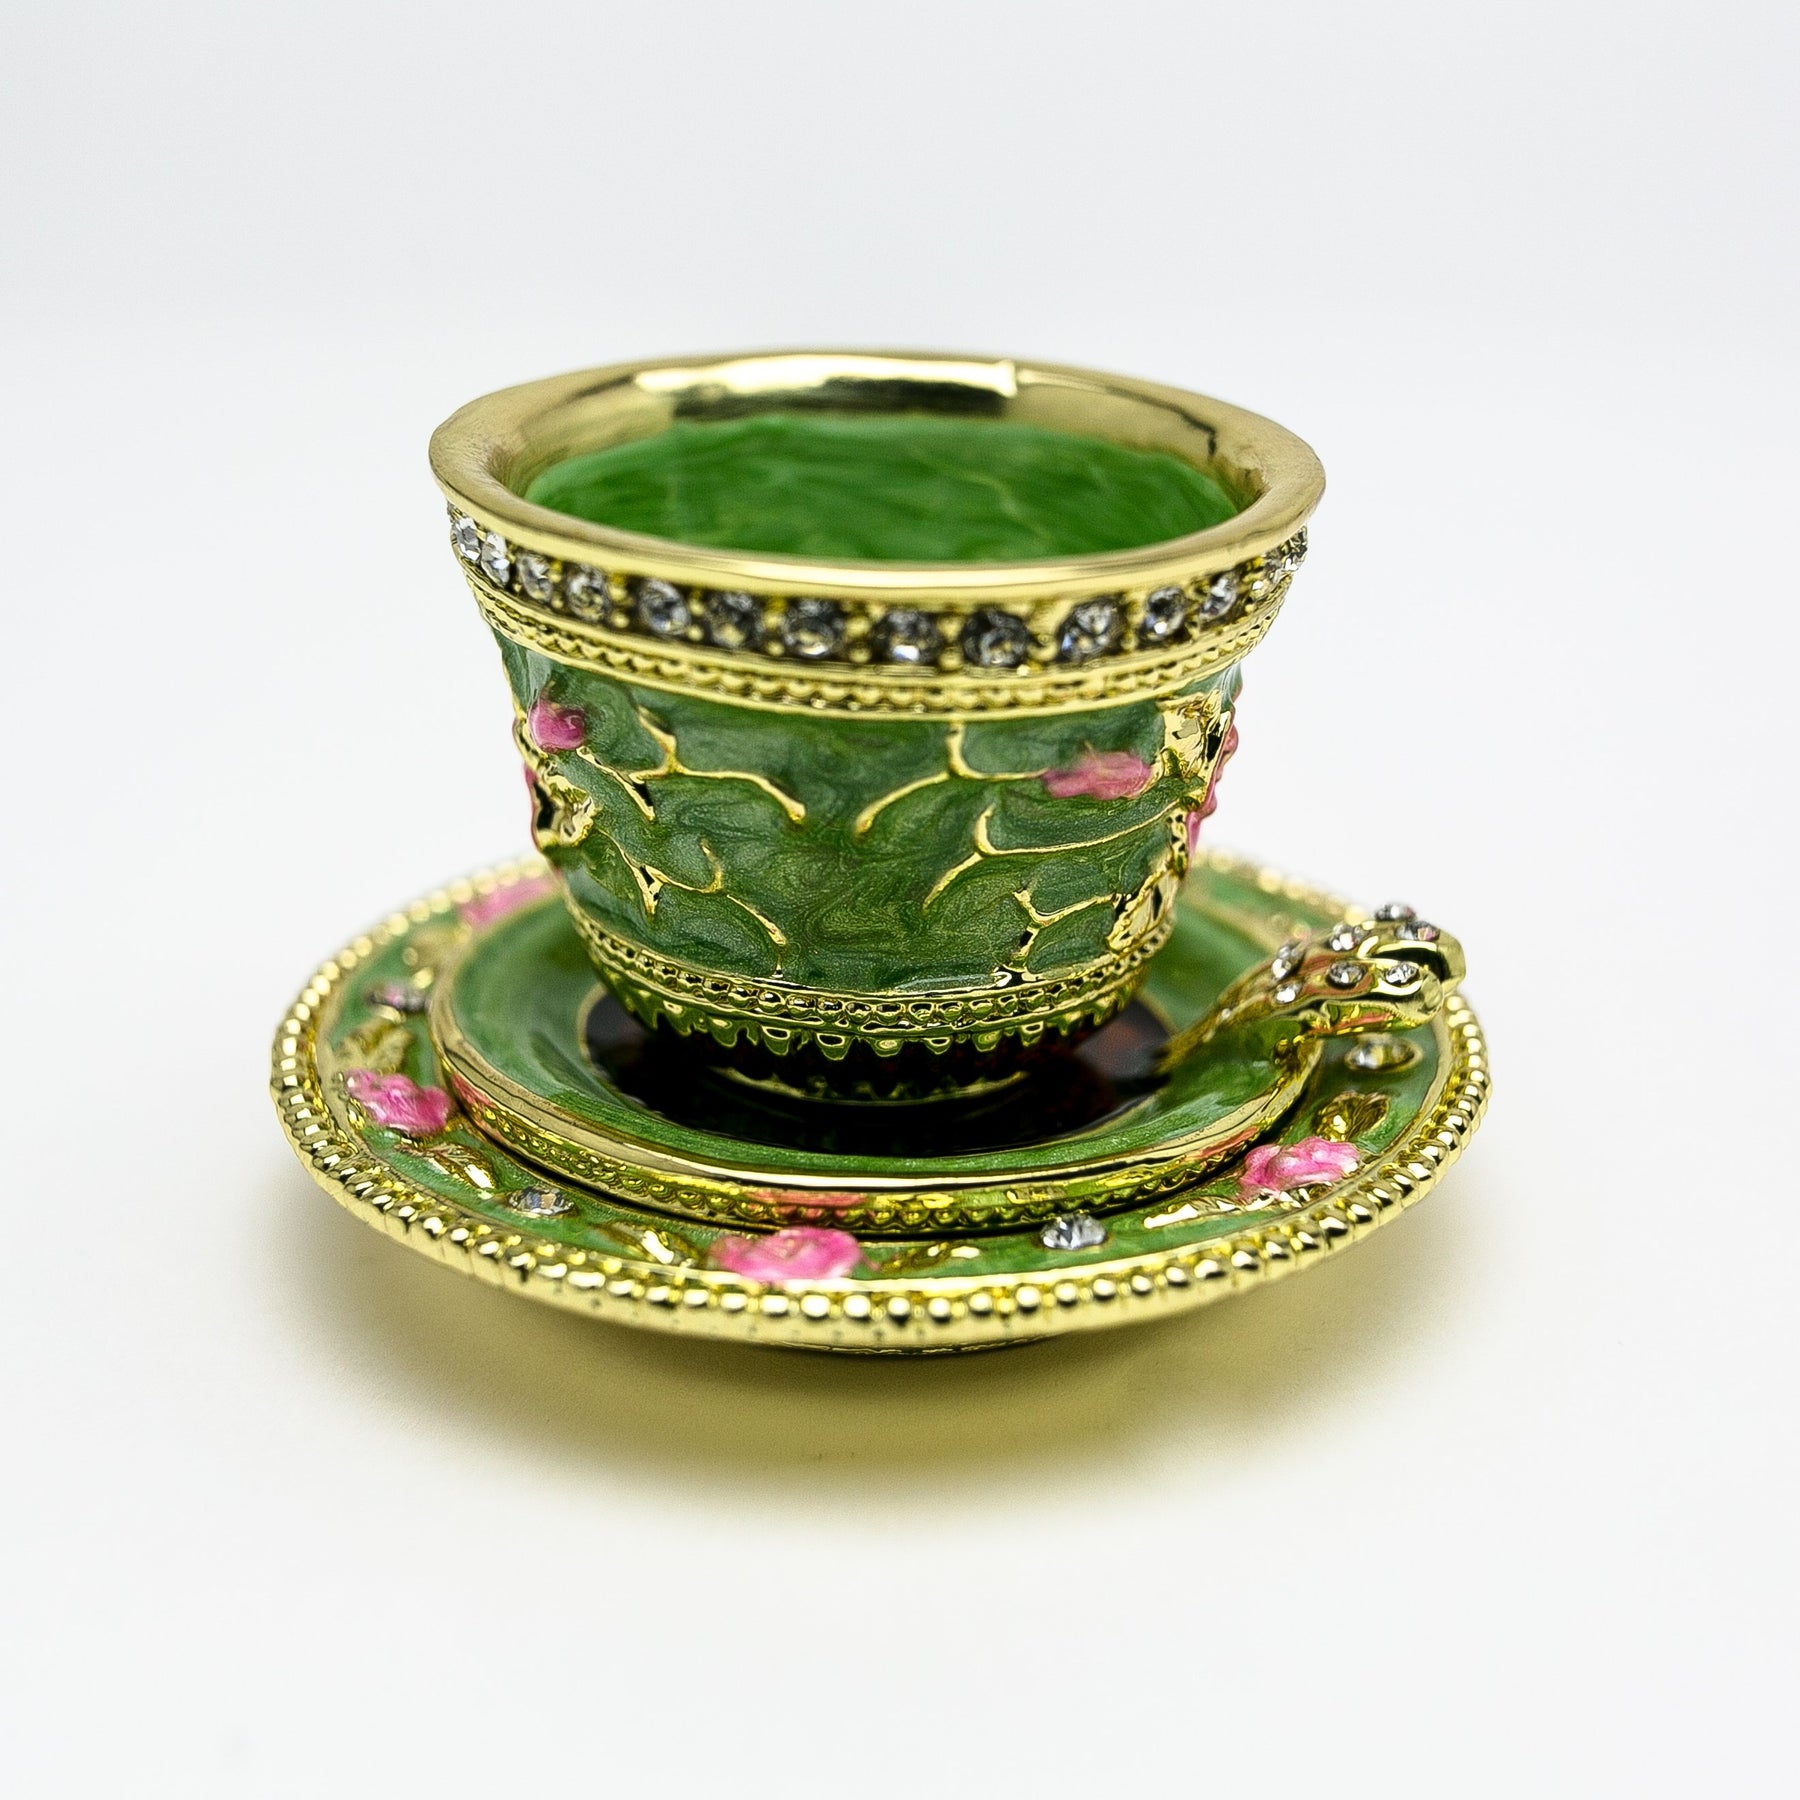 Green Cup of Tea  Keren Kopal